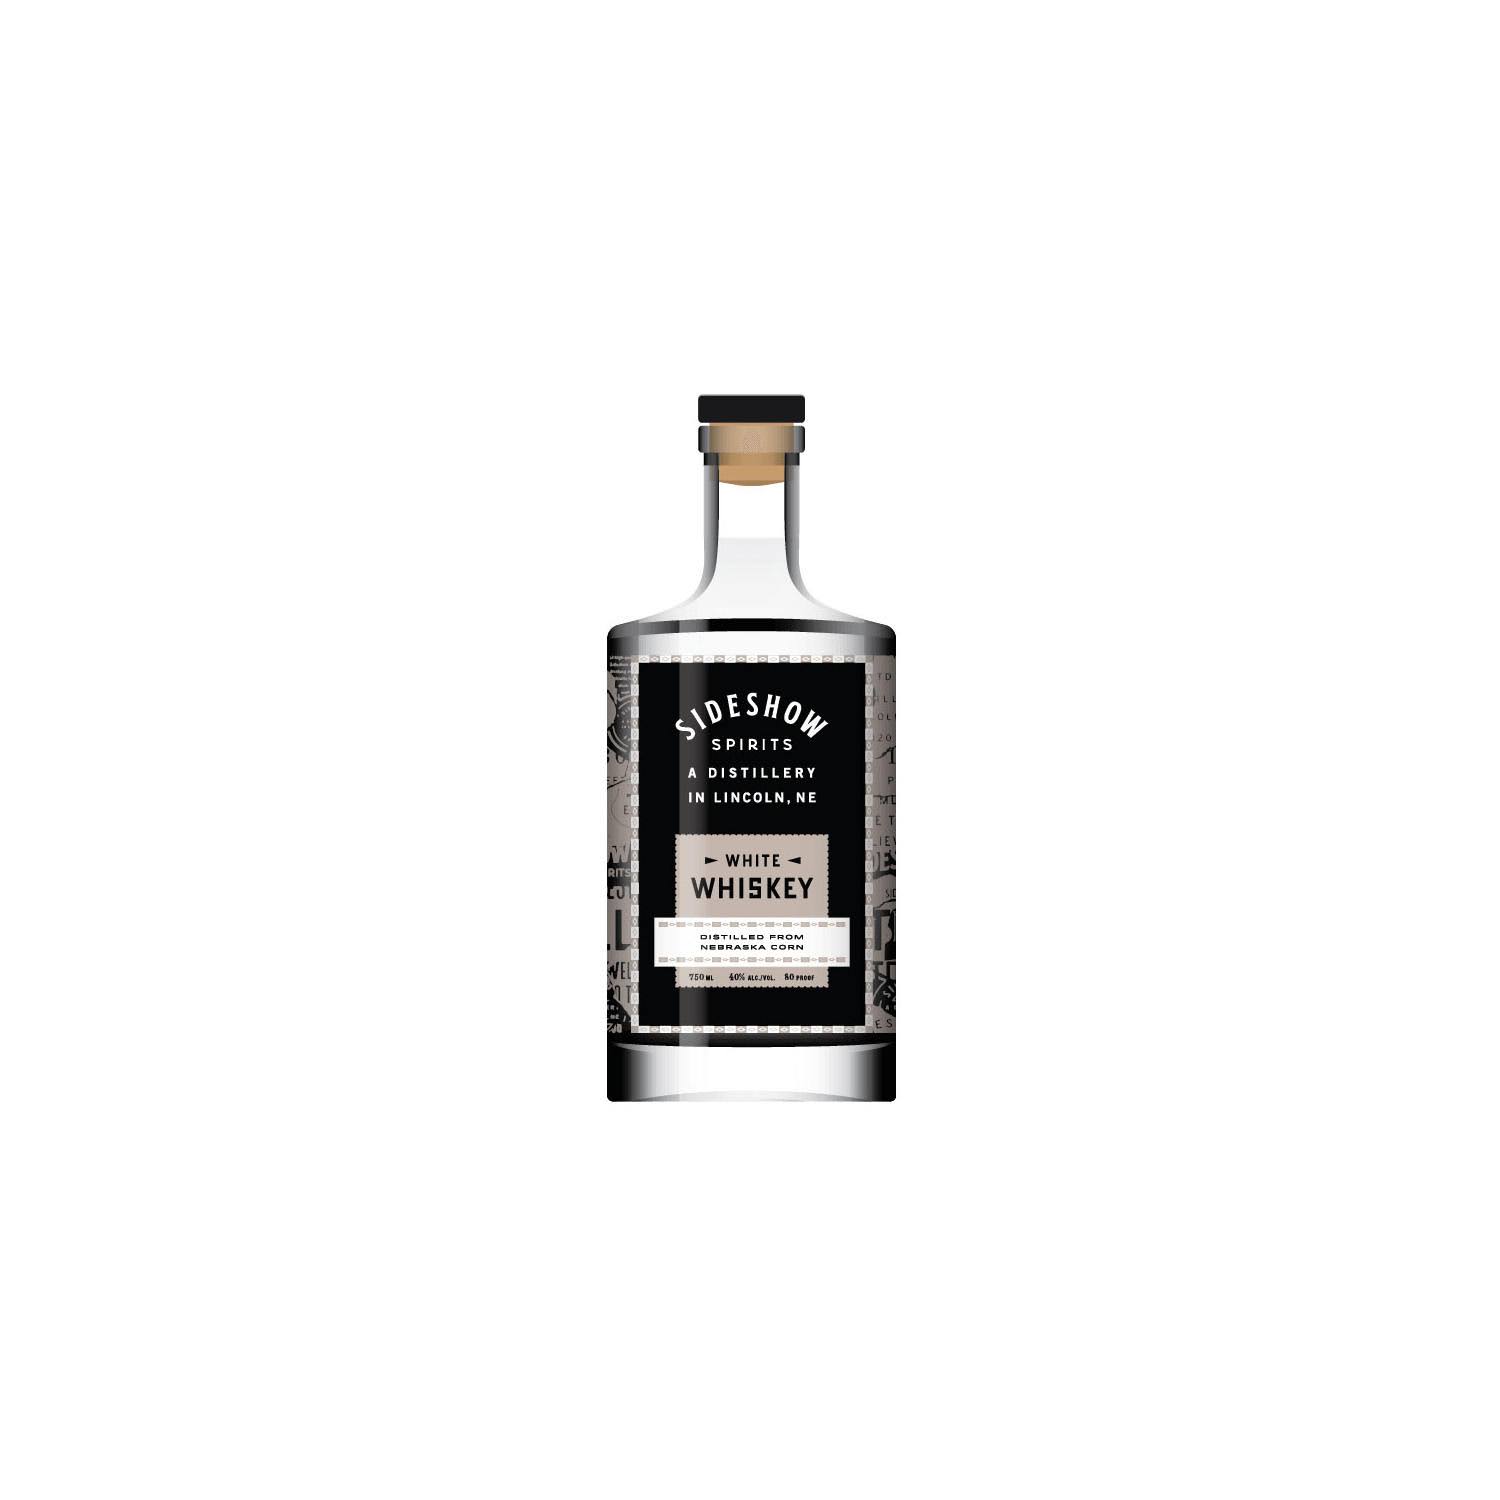 Sideshow Spirits White Whiskey (750 mL)